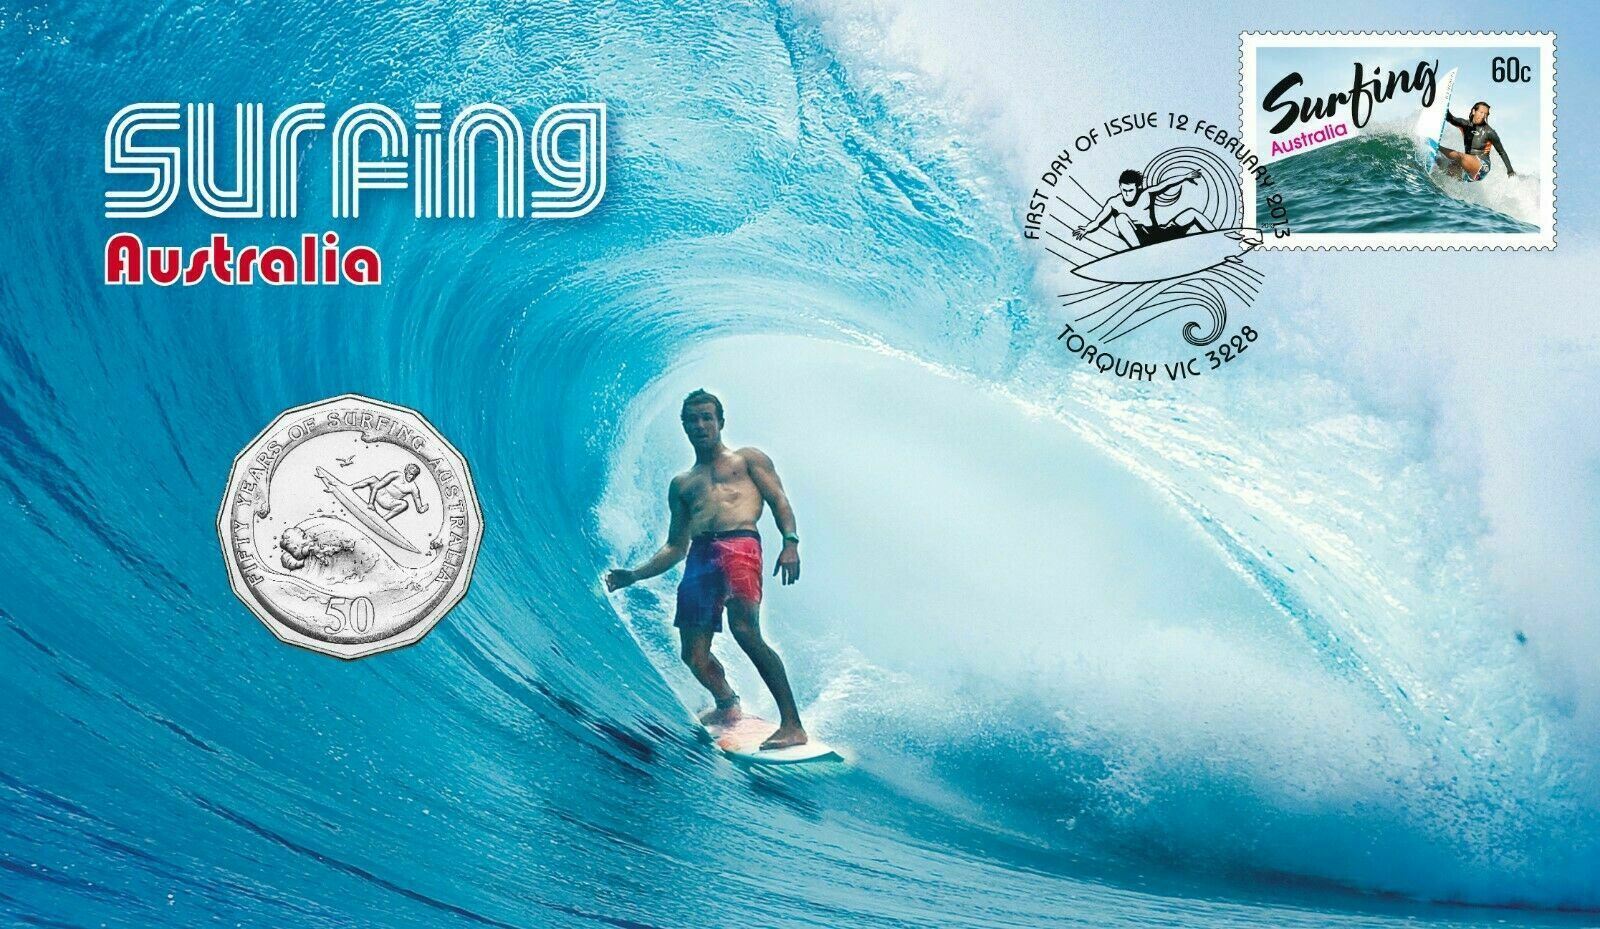 PNC Australia 2013 Surfing Australia RAM 50c Commemorative Coin